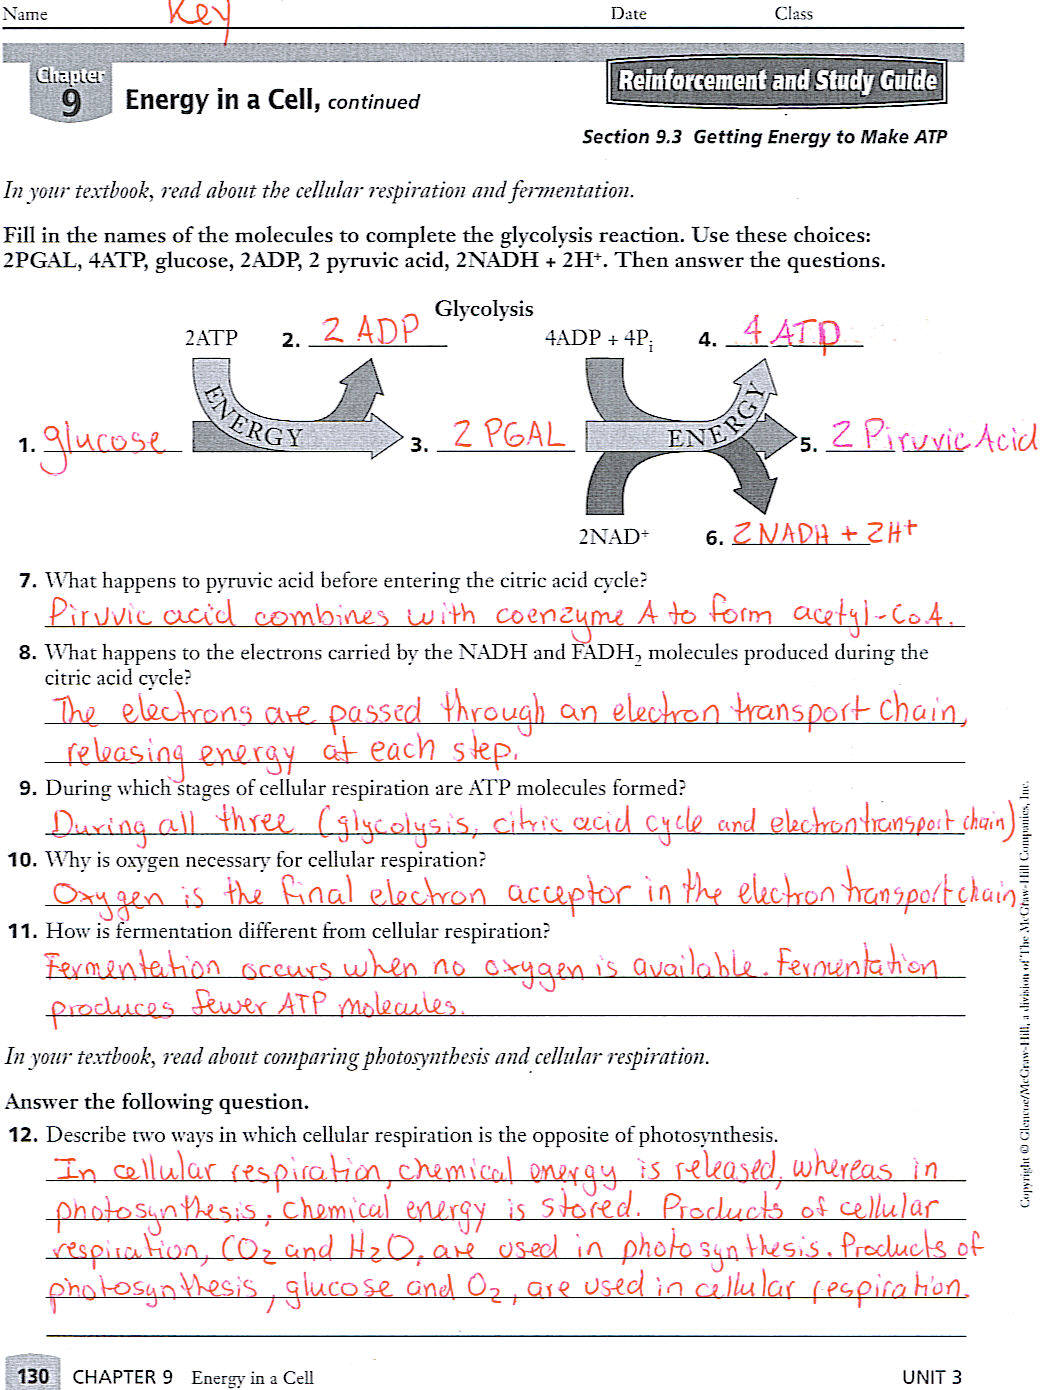 ib-biology-solalto-9th-grade-3rd-mp